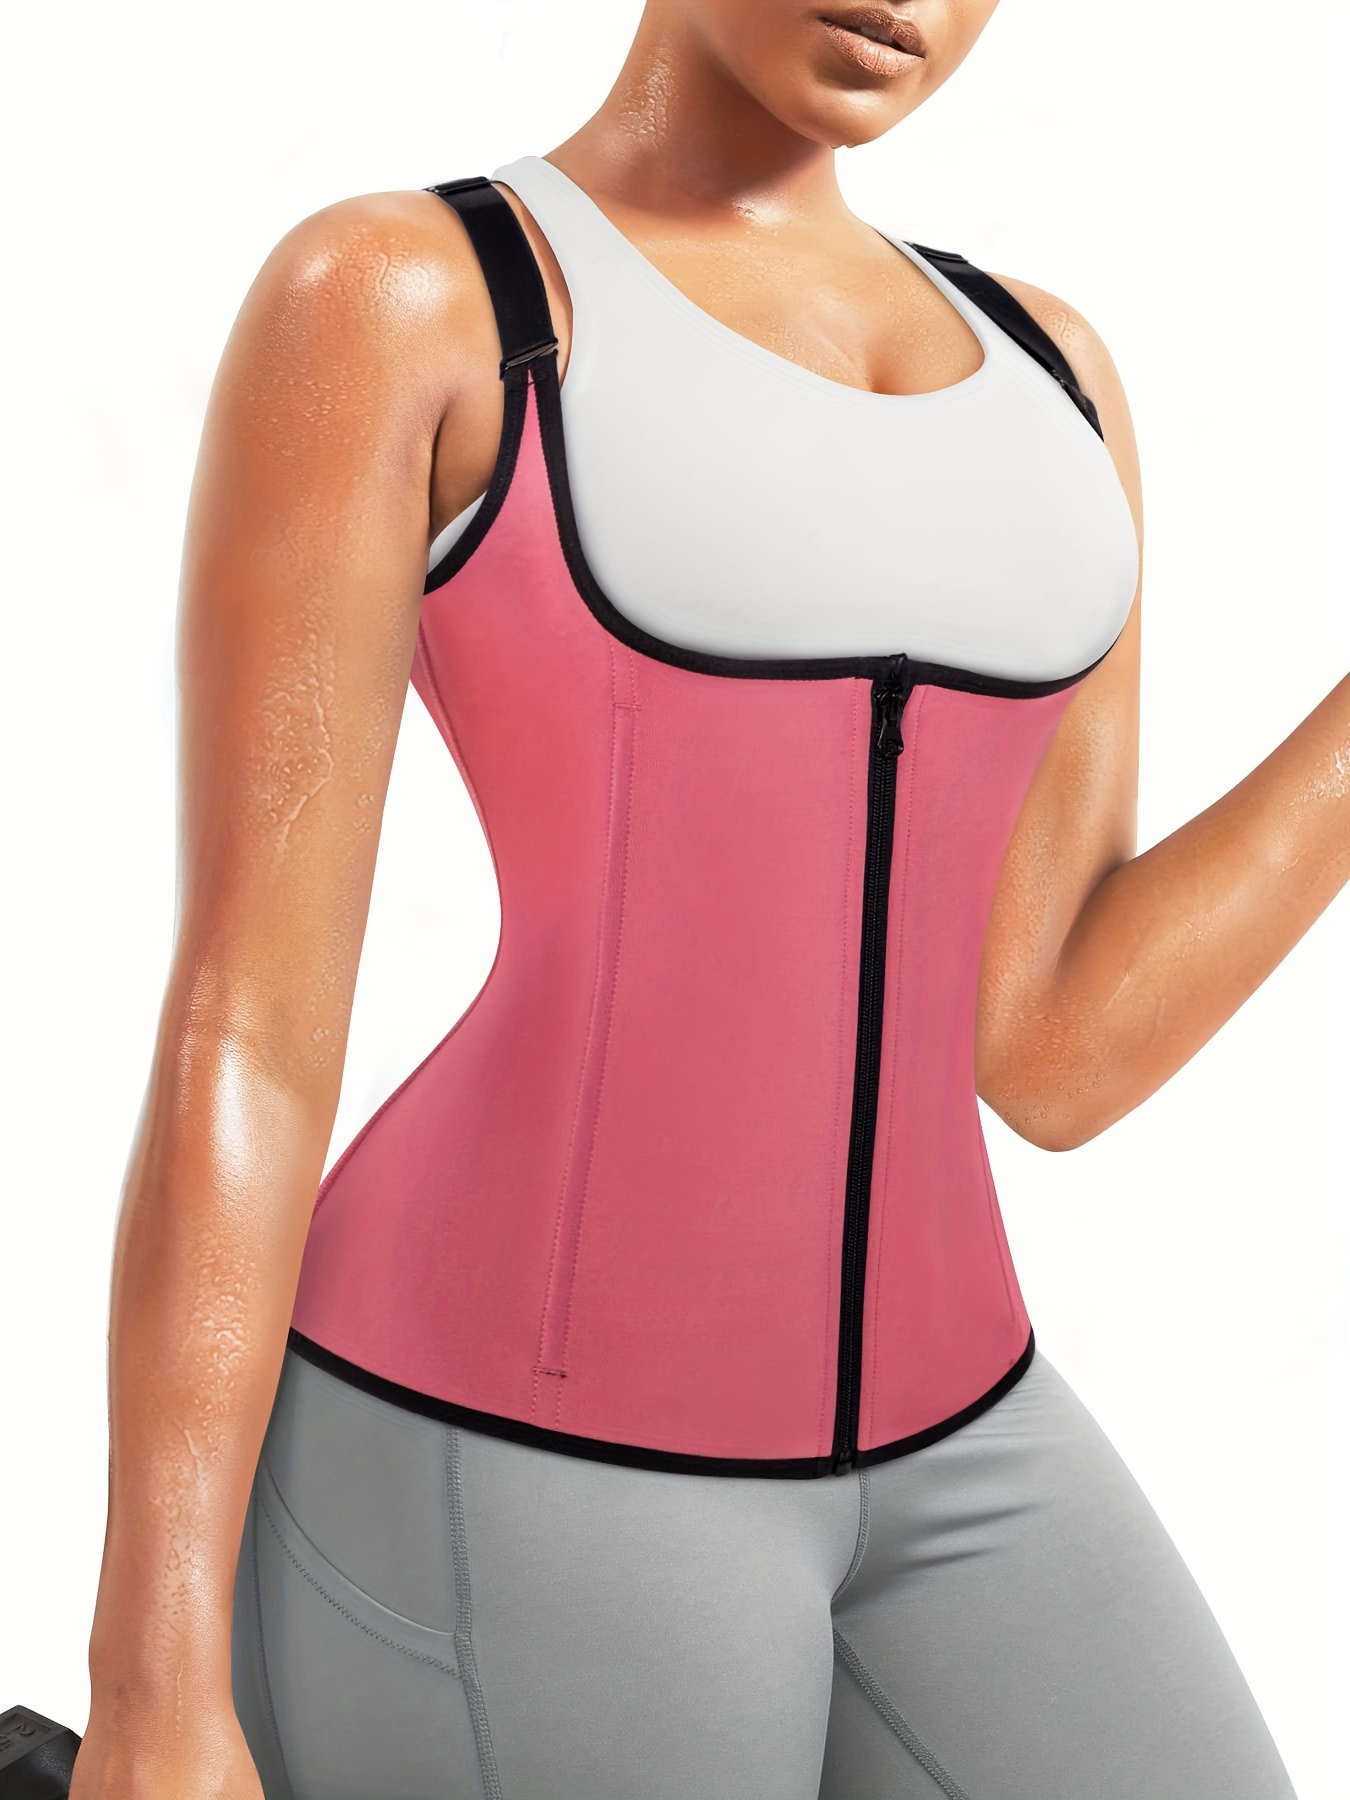  MERMAIDS MYSTERY Waist Trainer Vest For Women Neoprene Sauna  Sweat Workout Exercise Gym Tank Top Body Slim Stomach Tummy Shaper Trimmer  Wrap Belt Zip Up Corset Suit Hot Band Zipper